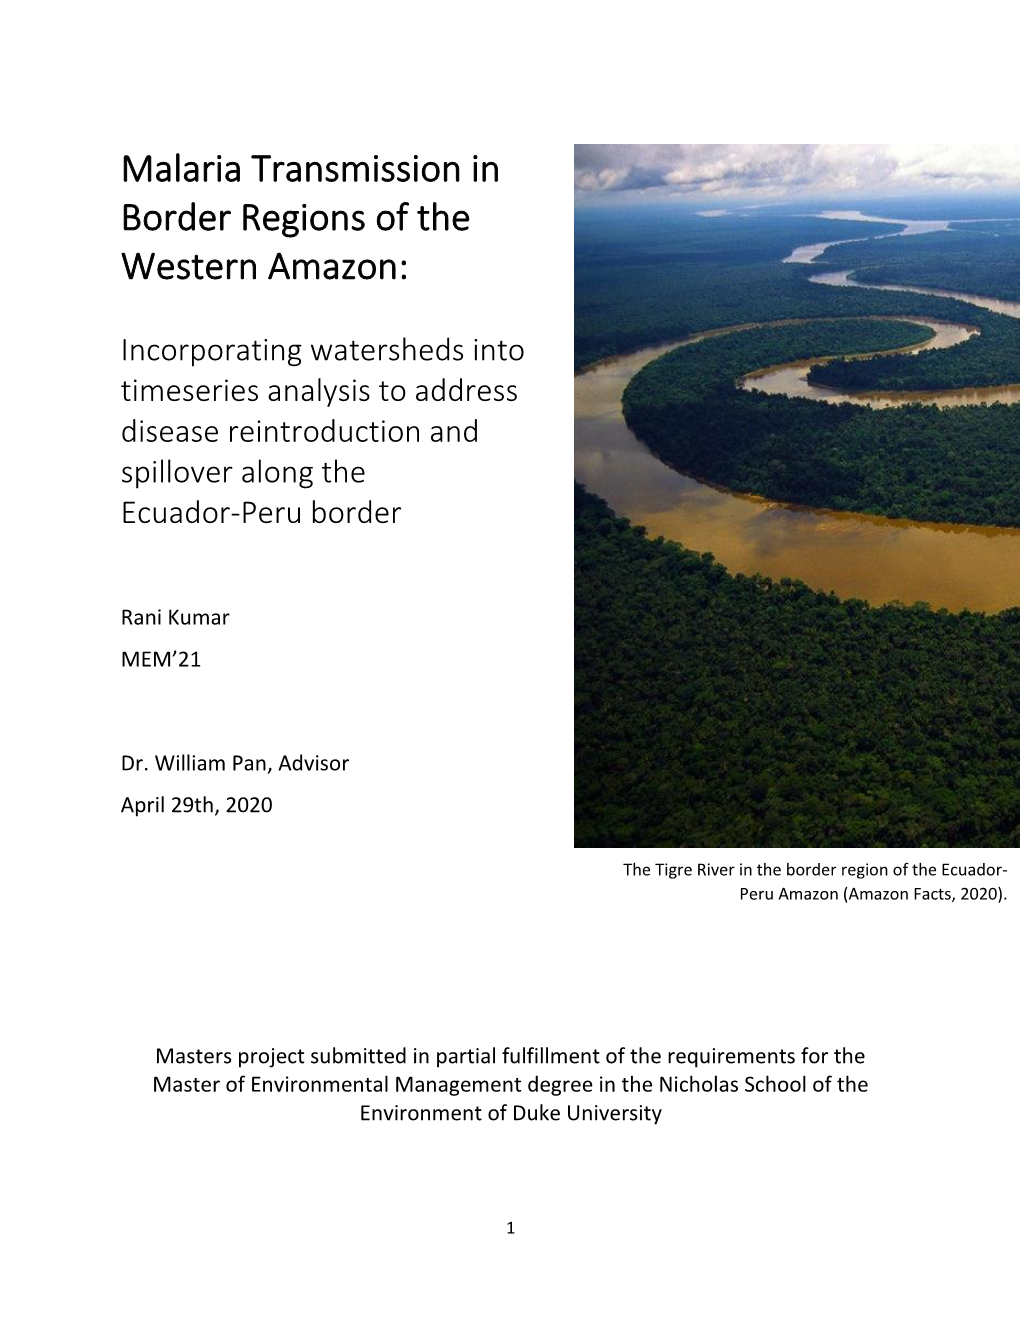 Malaria Transmission in Border Regions of the Western Amazon